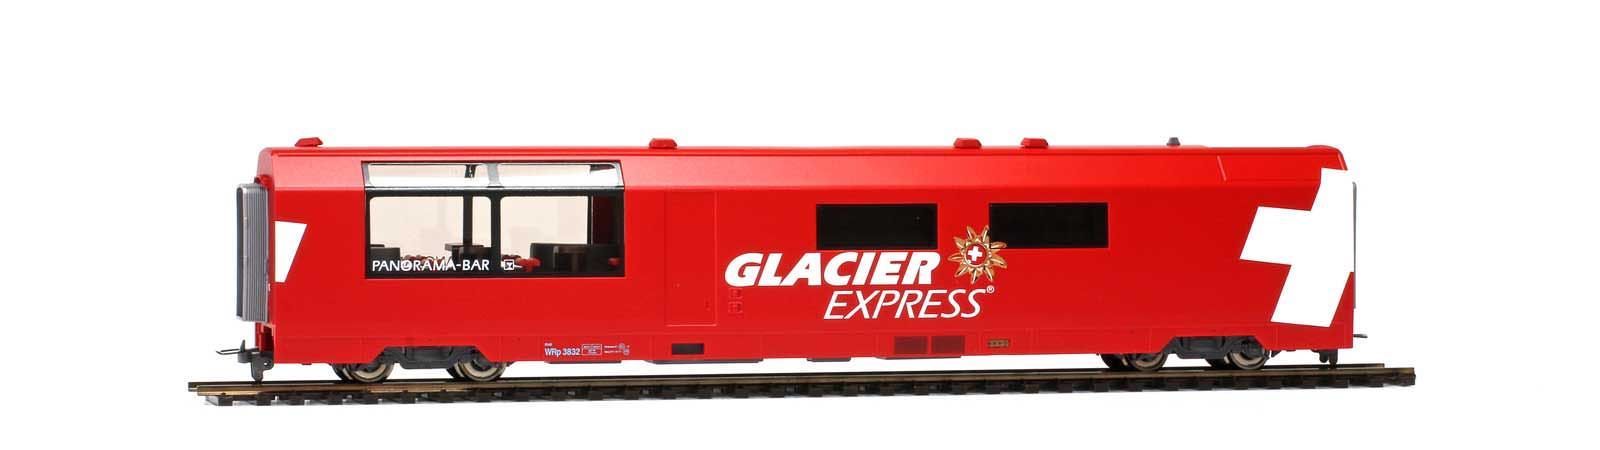 Bemo 3689132 - Servicewagen RhB WRp 3832 Glacier-Express H0/GL